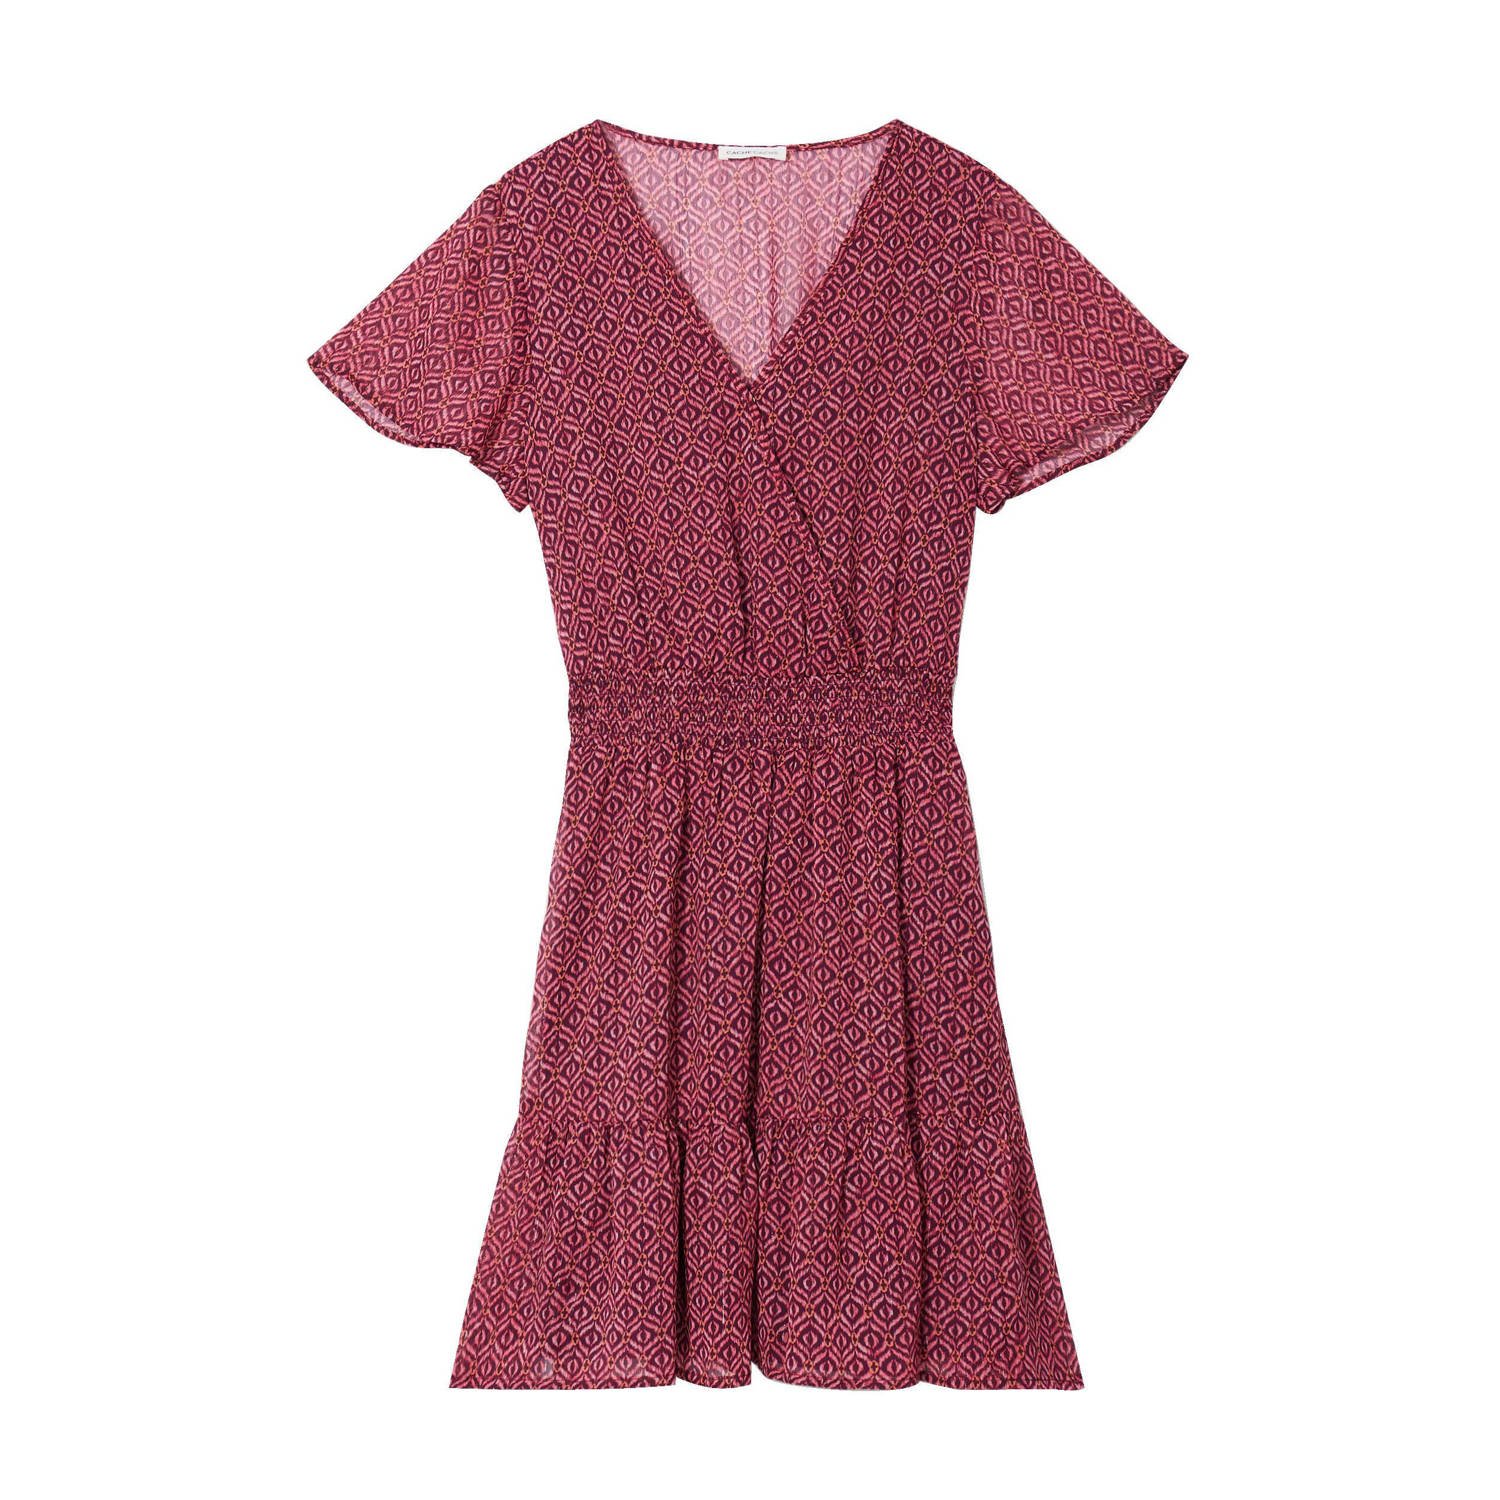 Cache semi-transparante jurk met all over print en volant roze rood